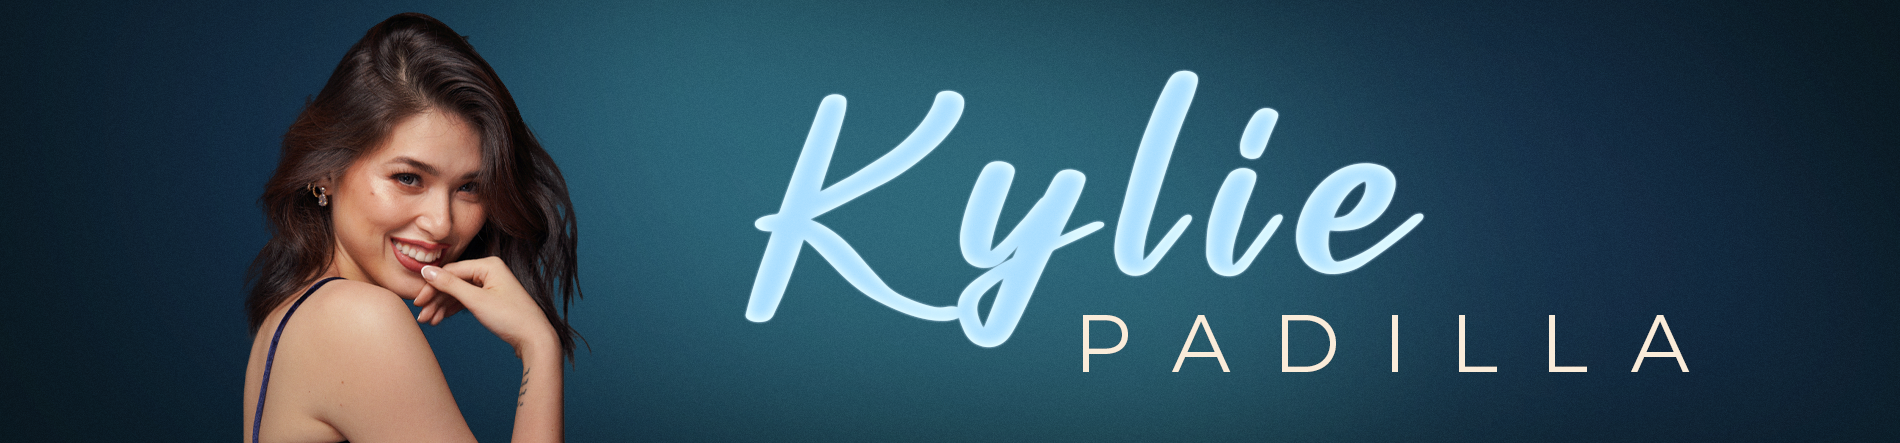 Kylie Padilla Desktop Banner